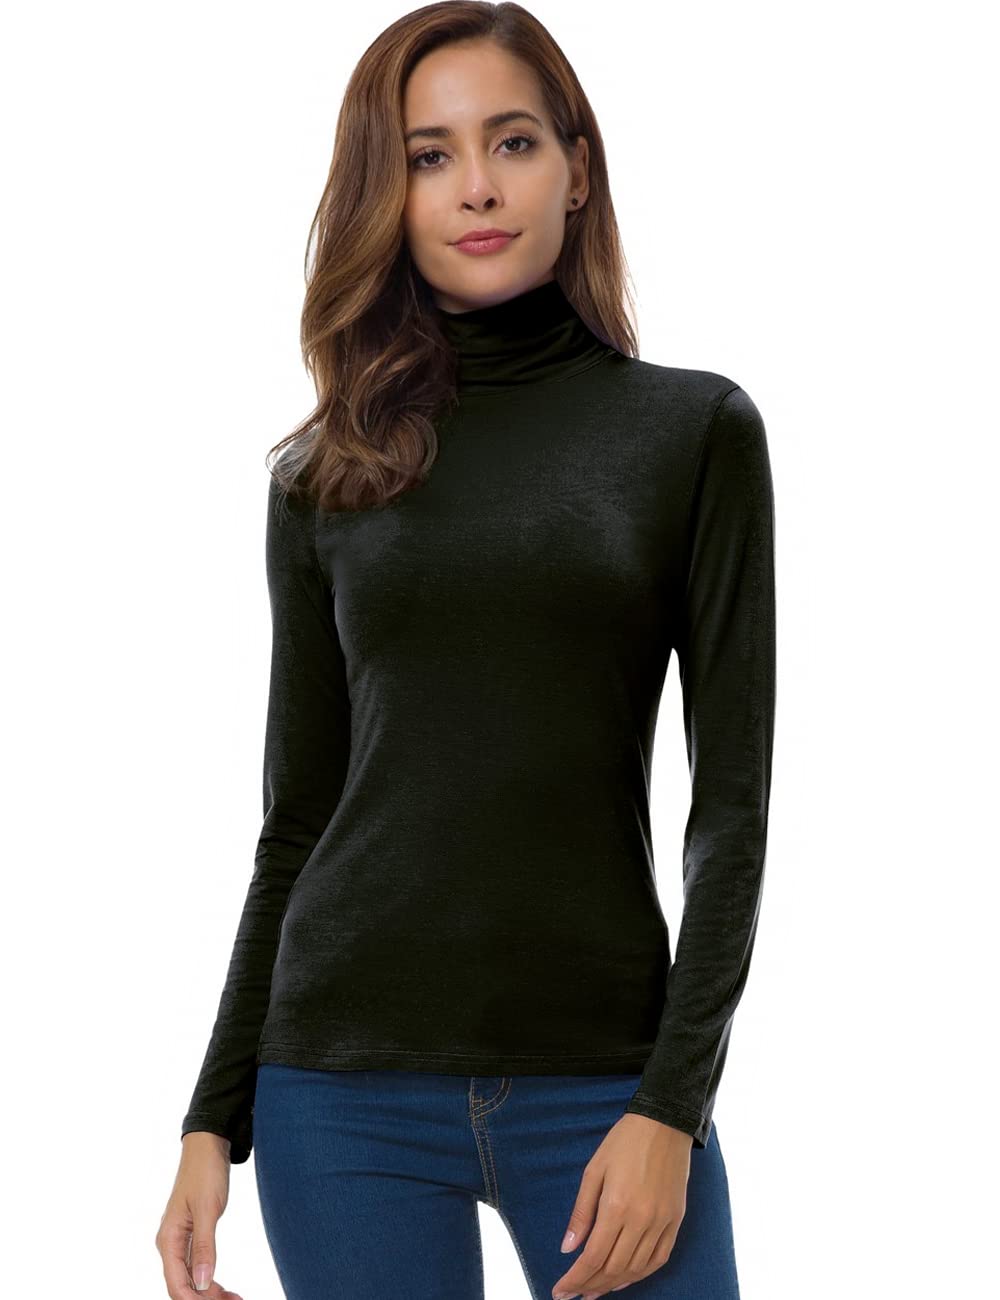 Black Turtleneck Womens Long Sleeve Fitted Tops Lightweight Slim Active Pullover Shirt Black Medium